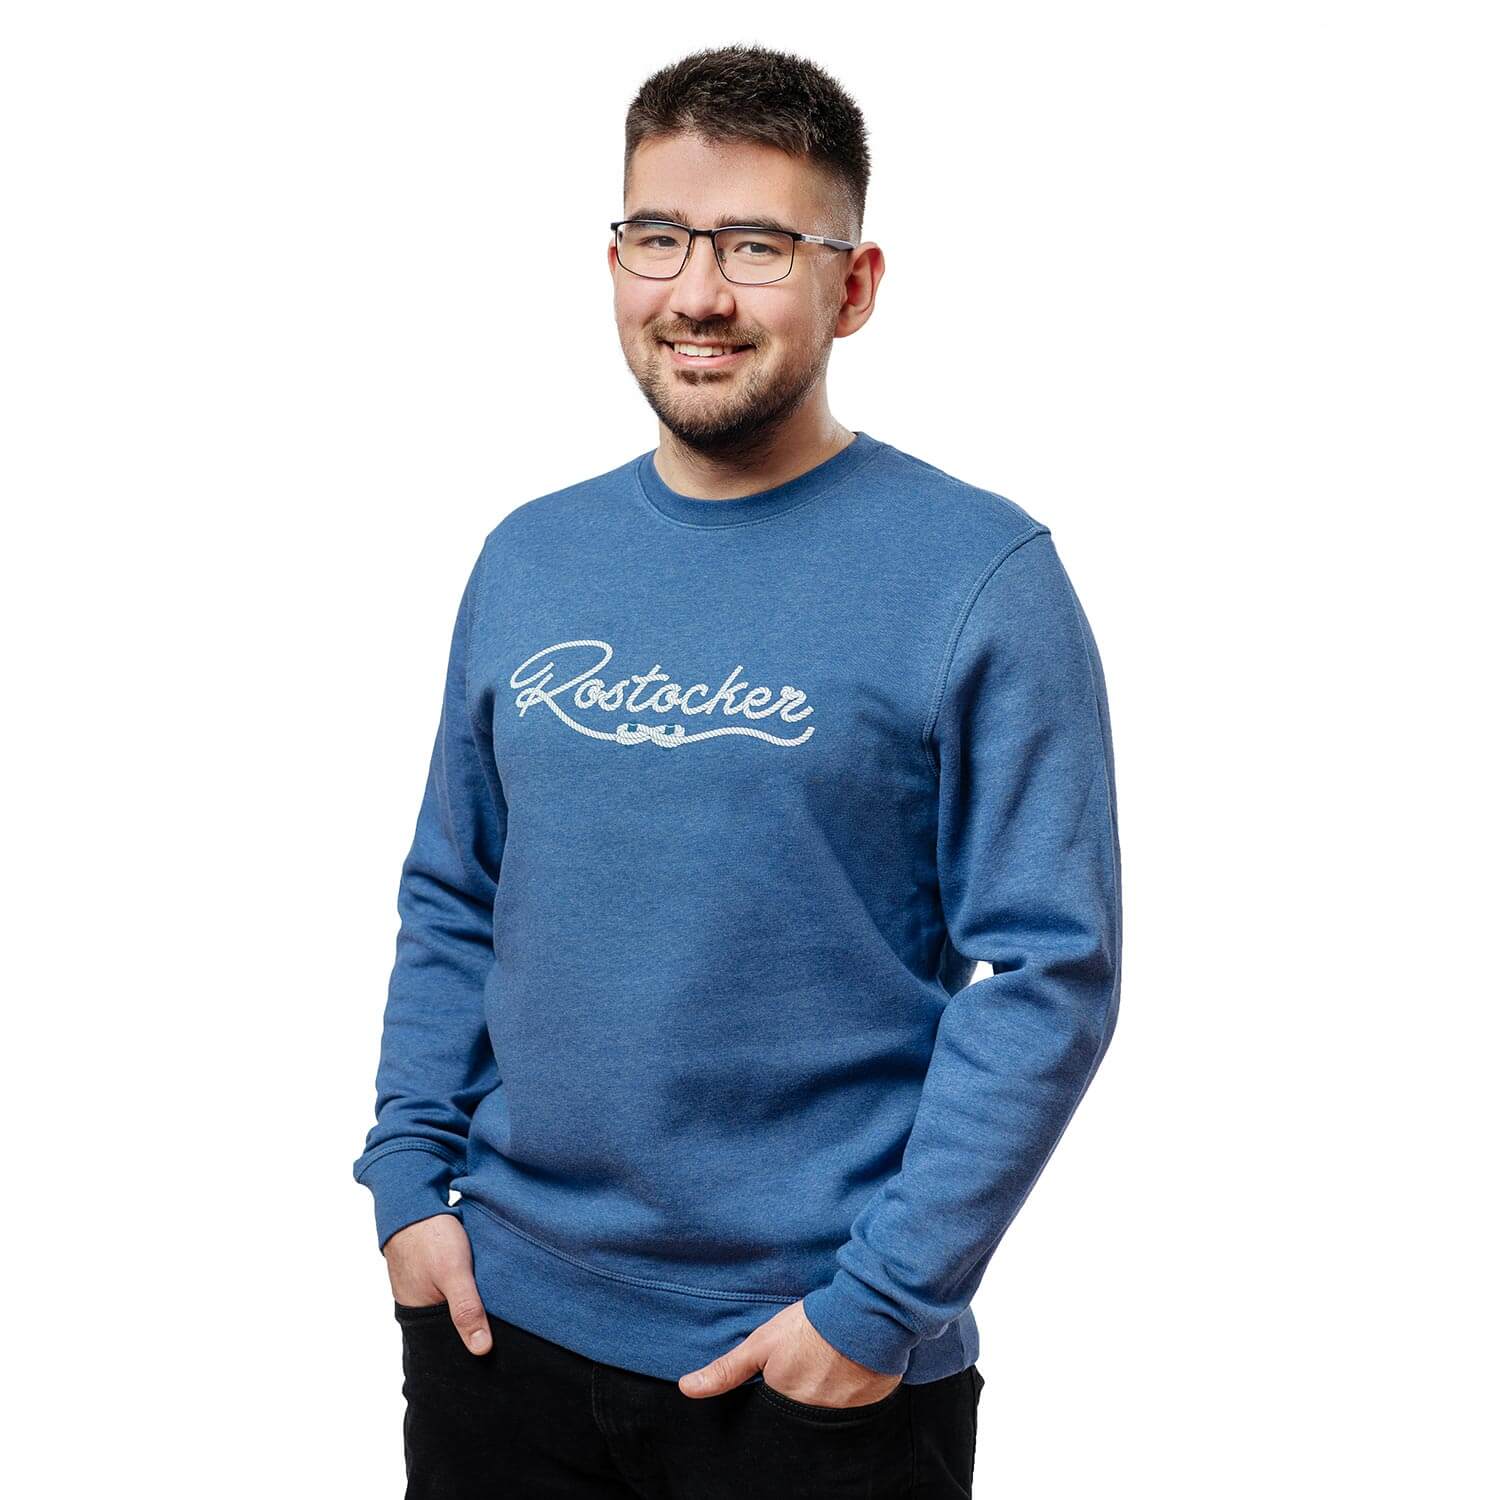 Rostocker Sweatshirt "Leine"